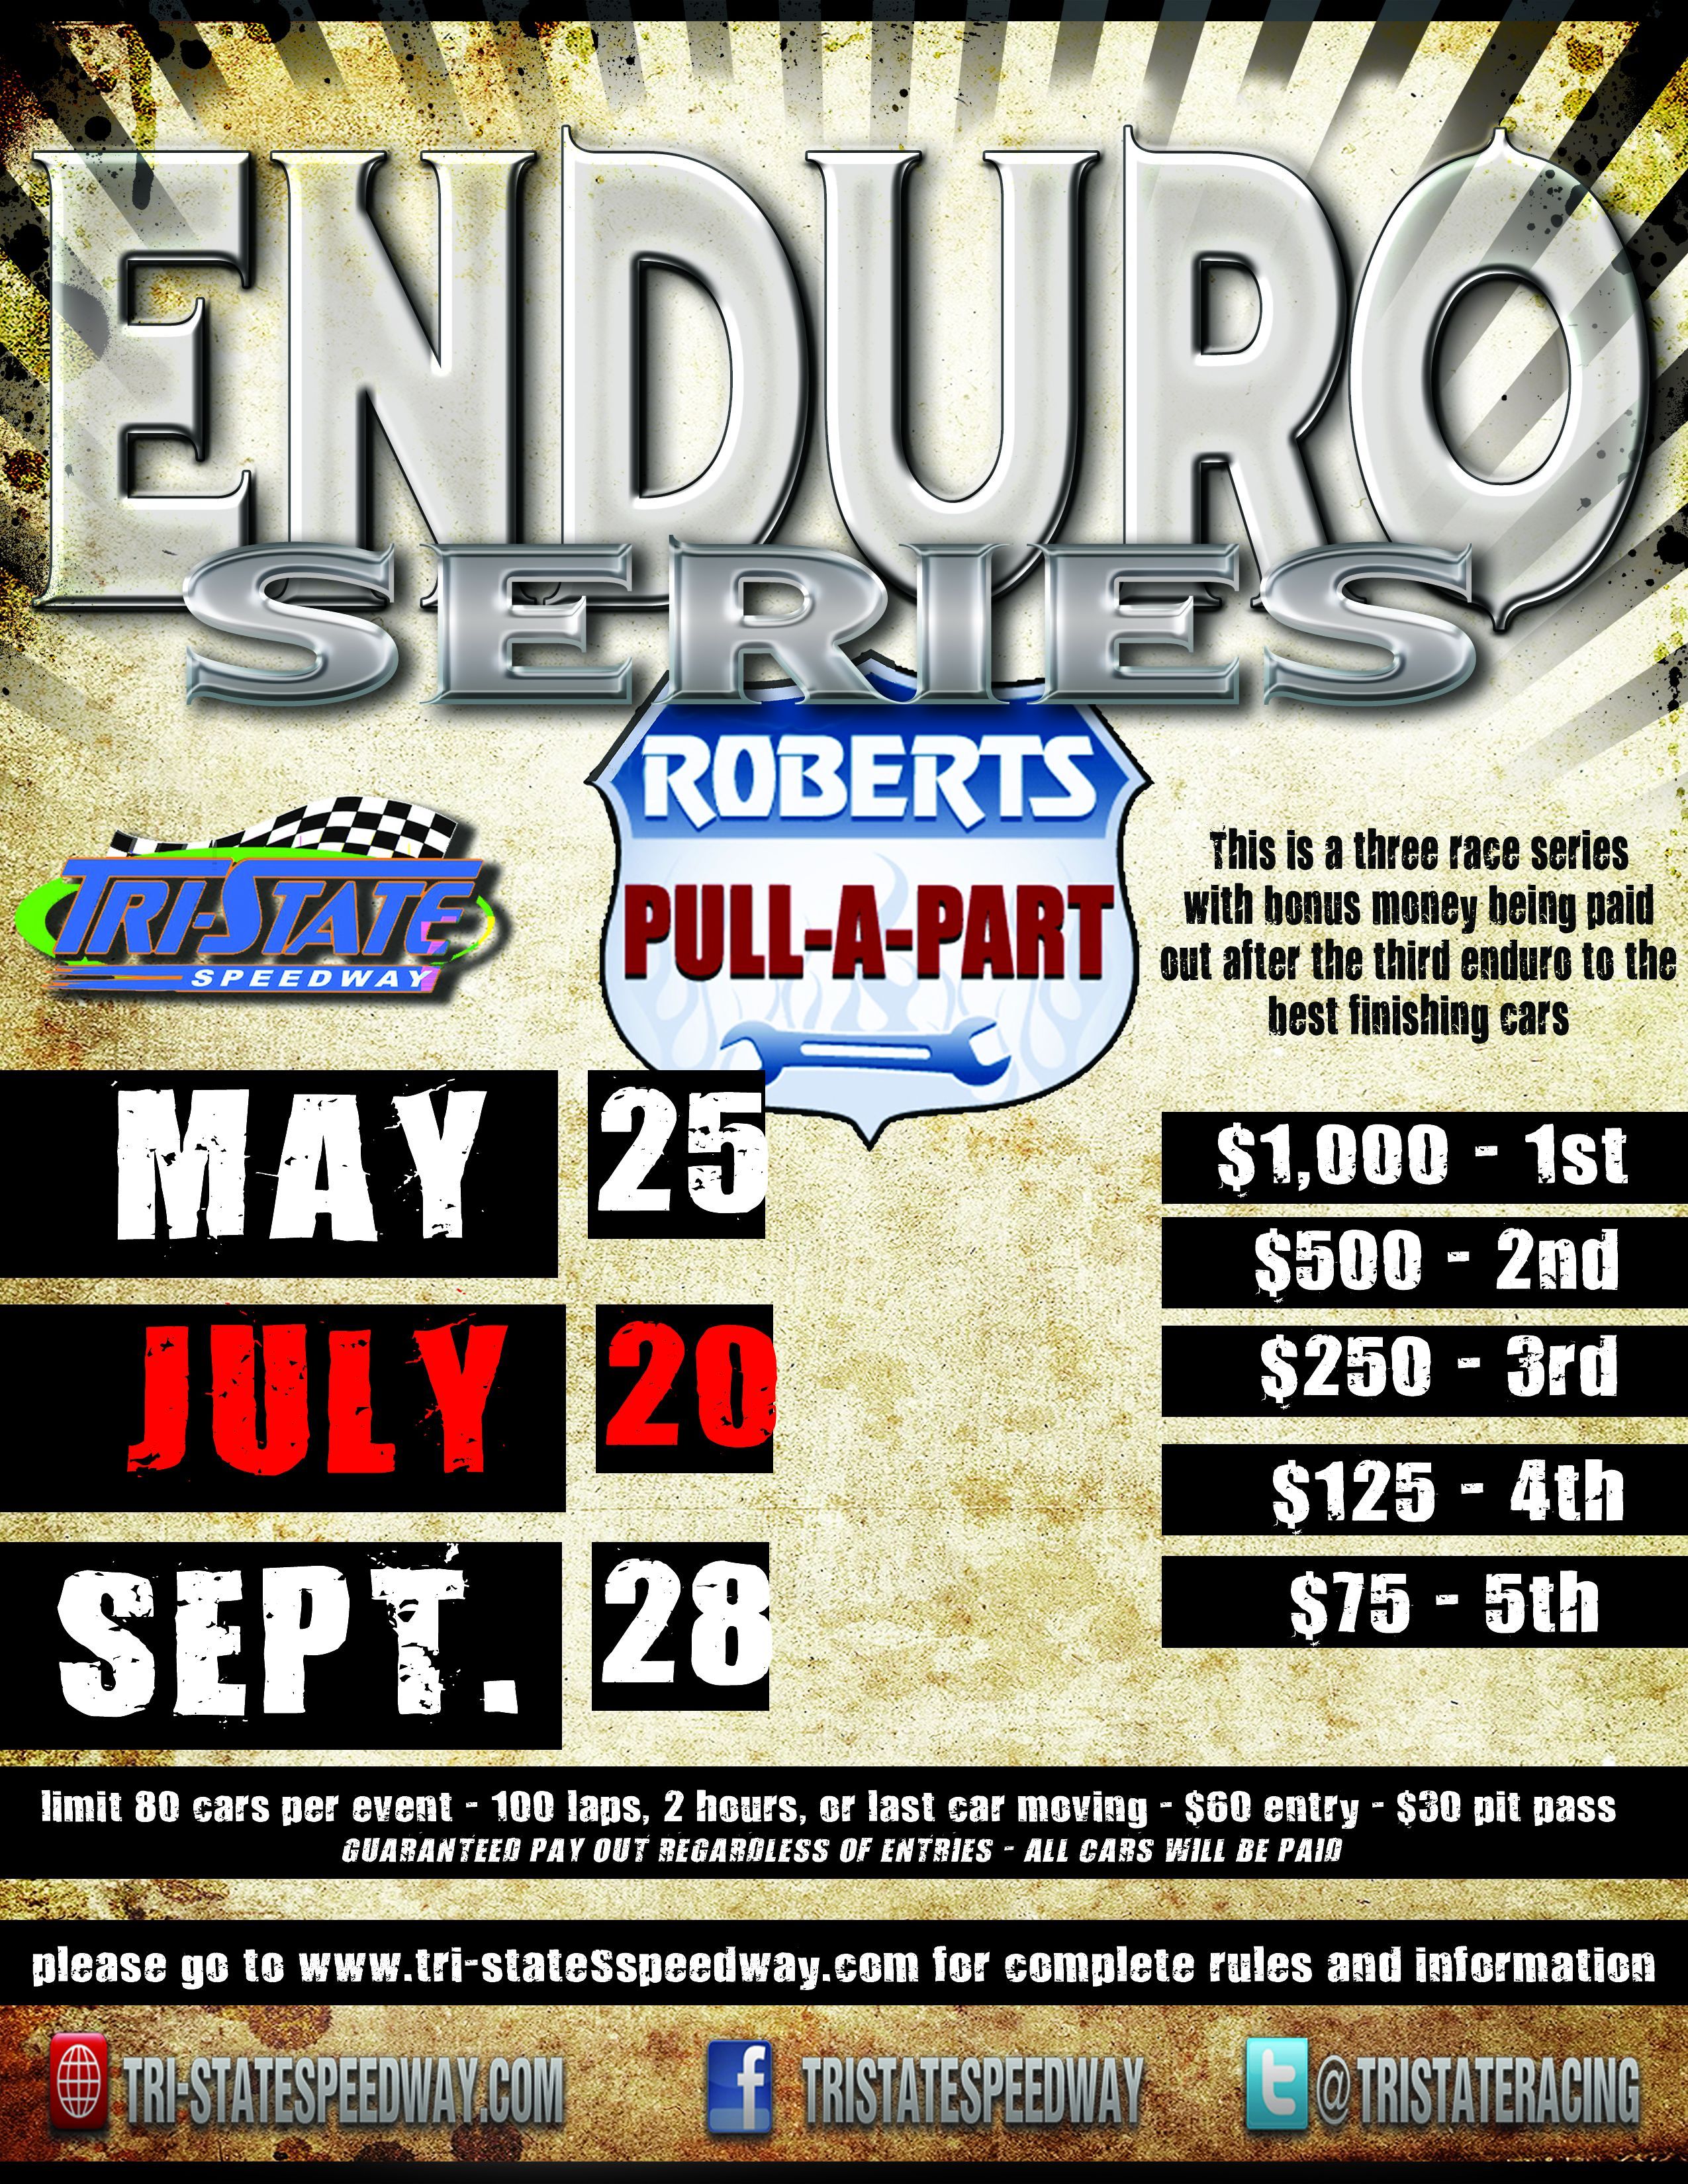 Enduro Series Race #2 - July 20th, 2013